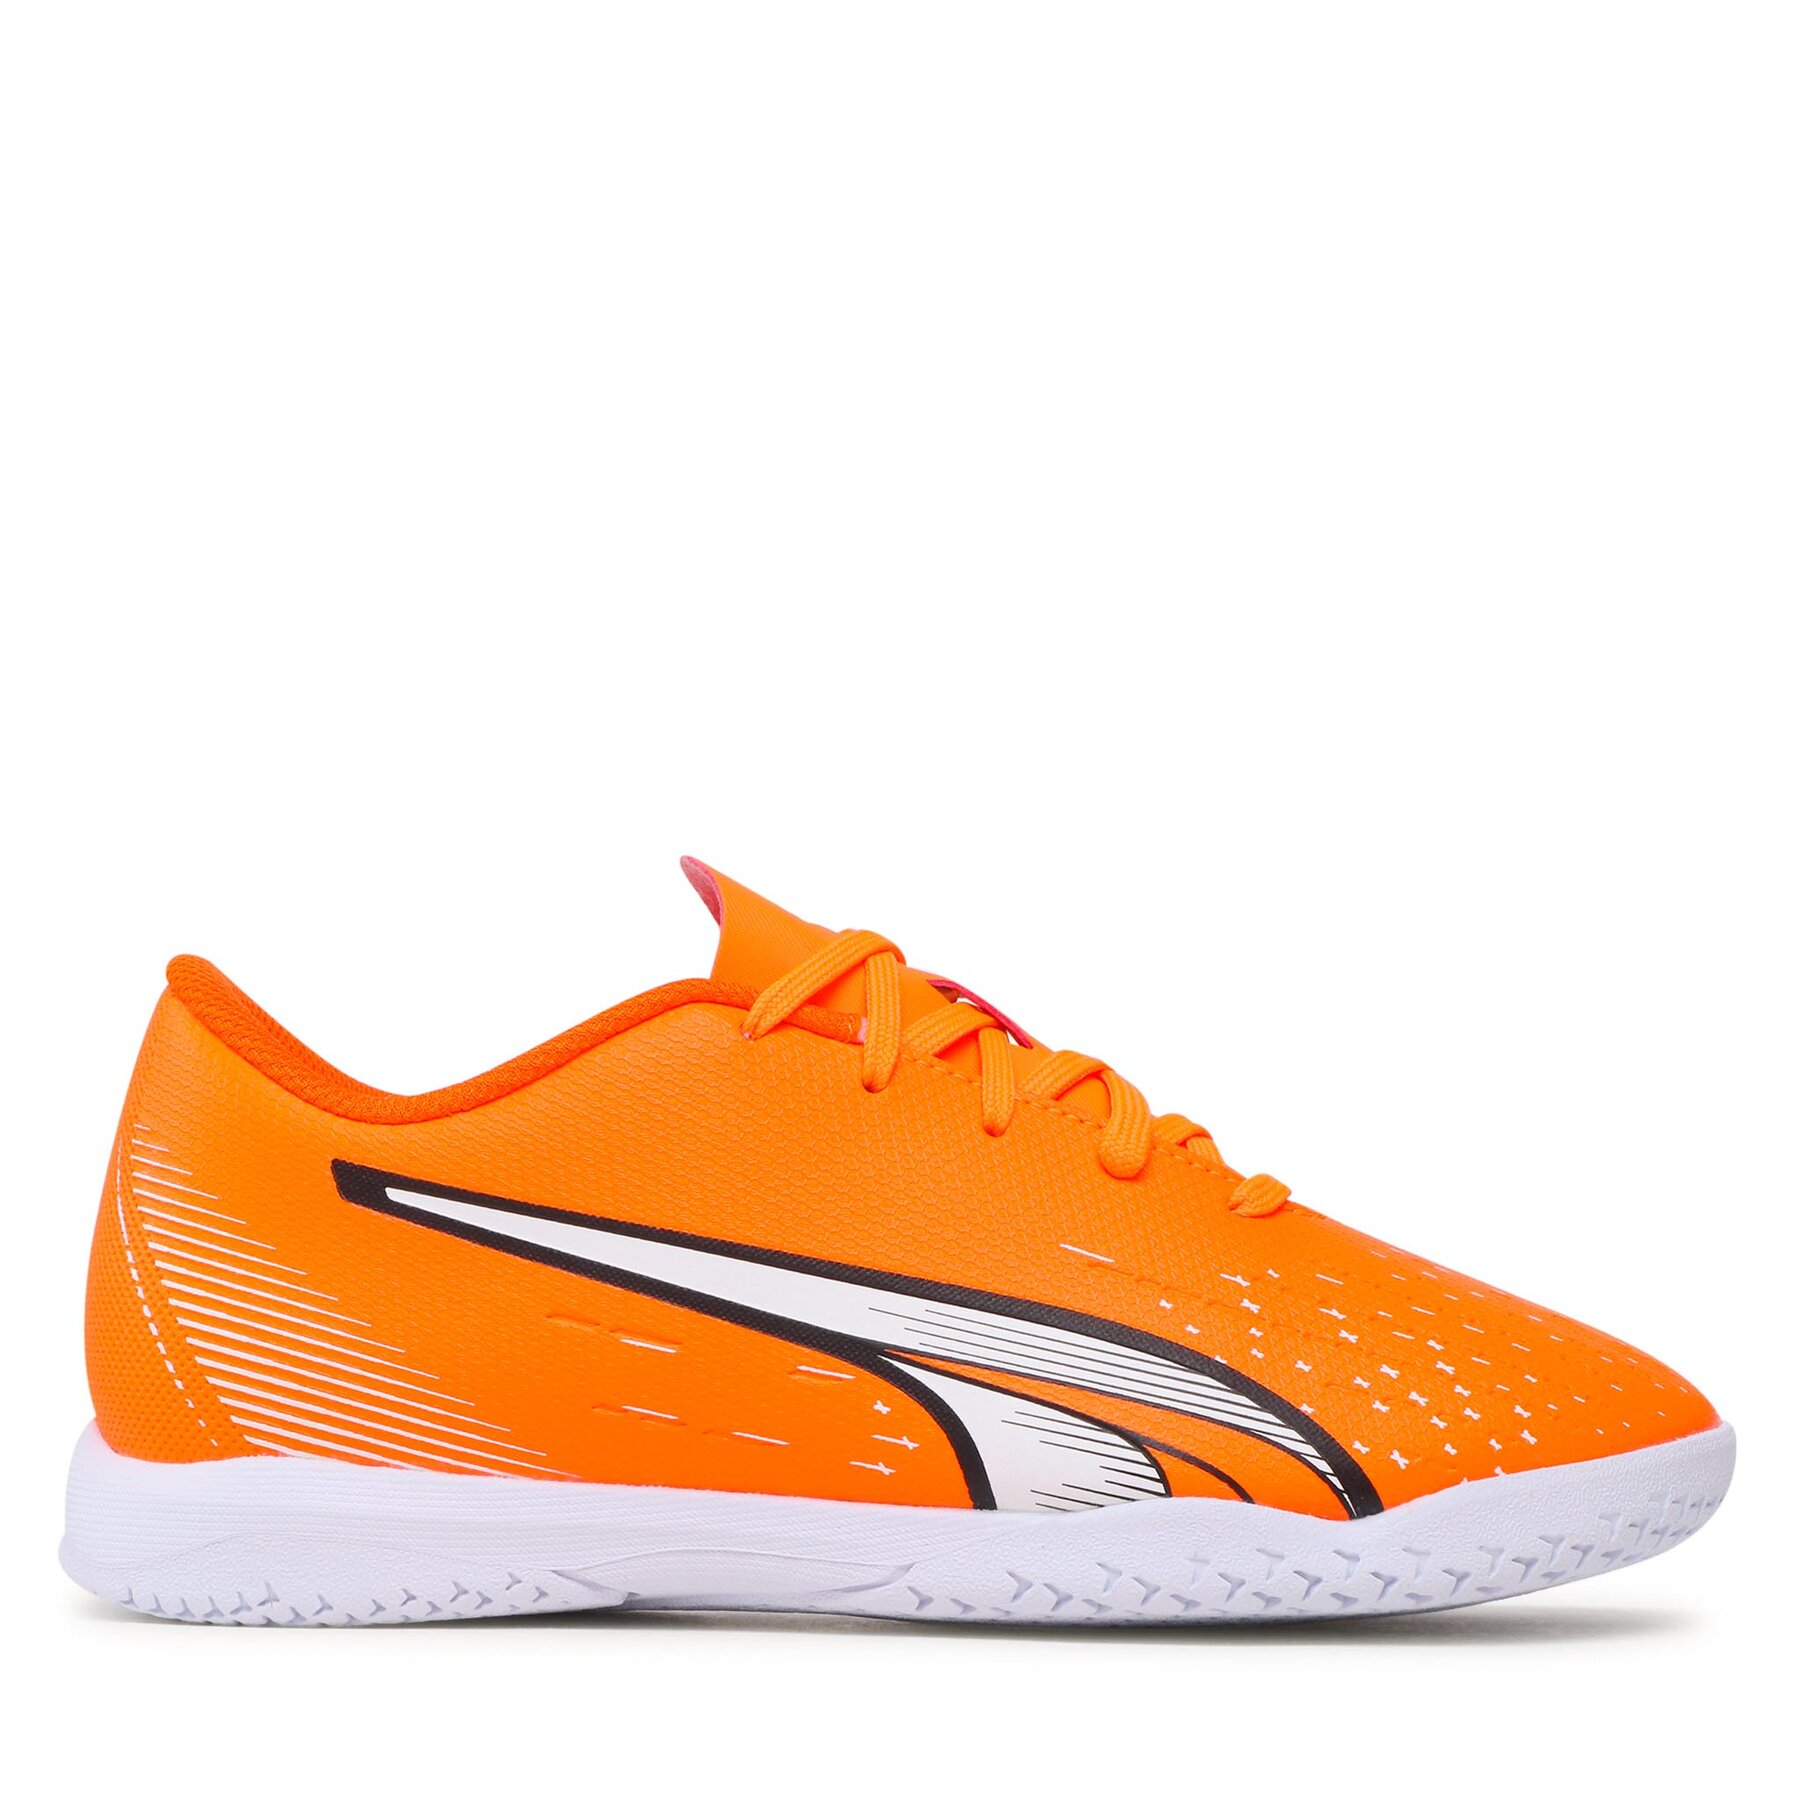 Schuhe Puma Ultra Play It Jr 107237 01 Orange/White/Blue von Puma